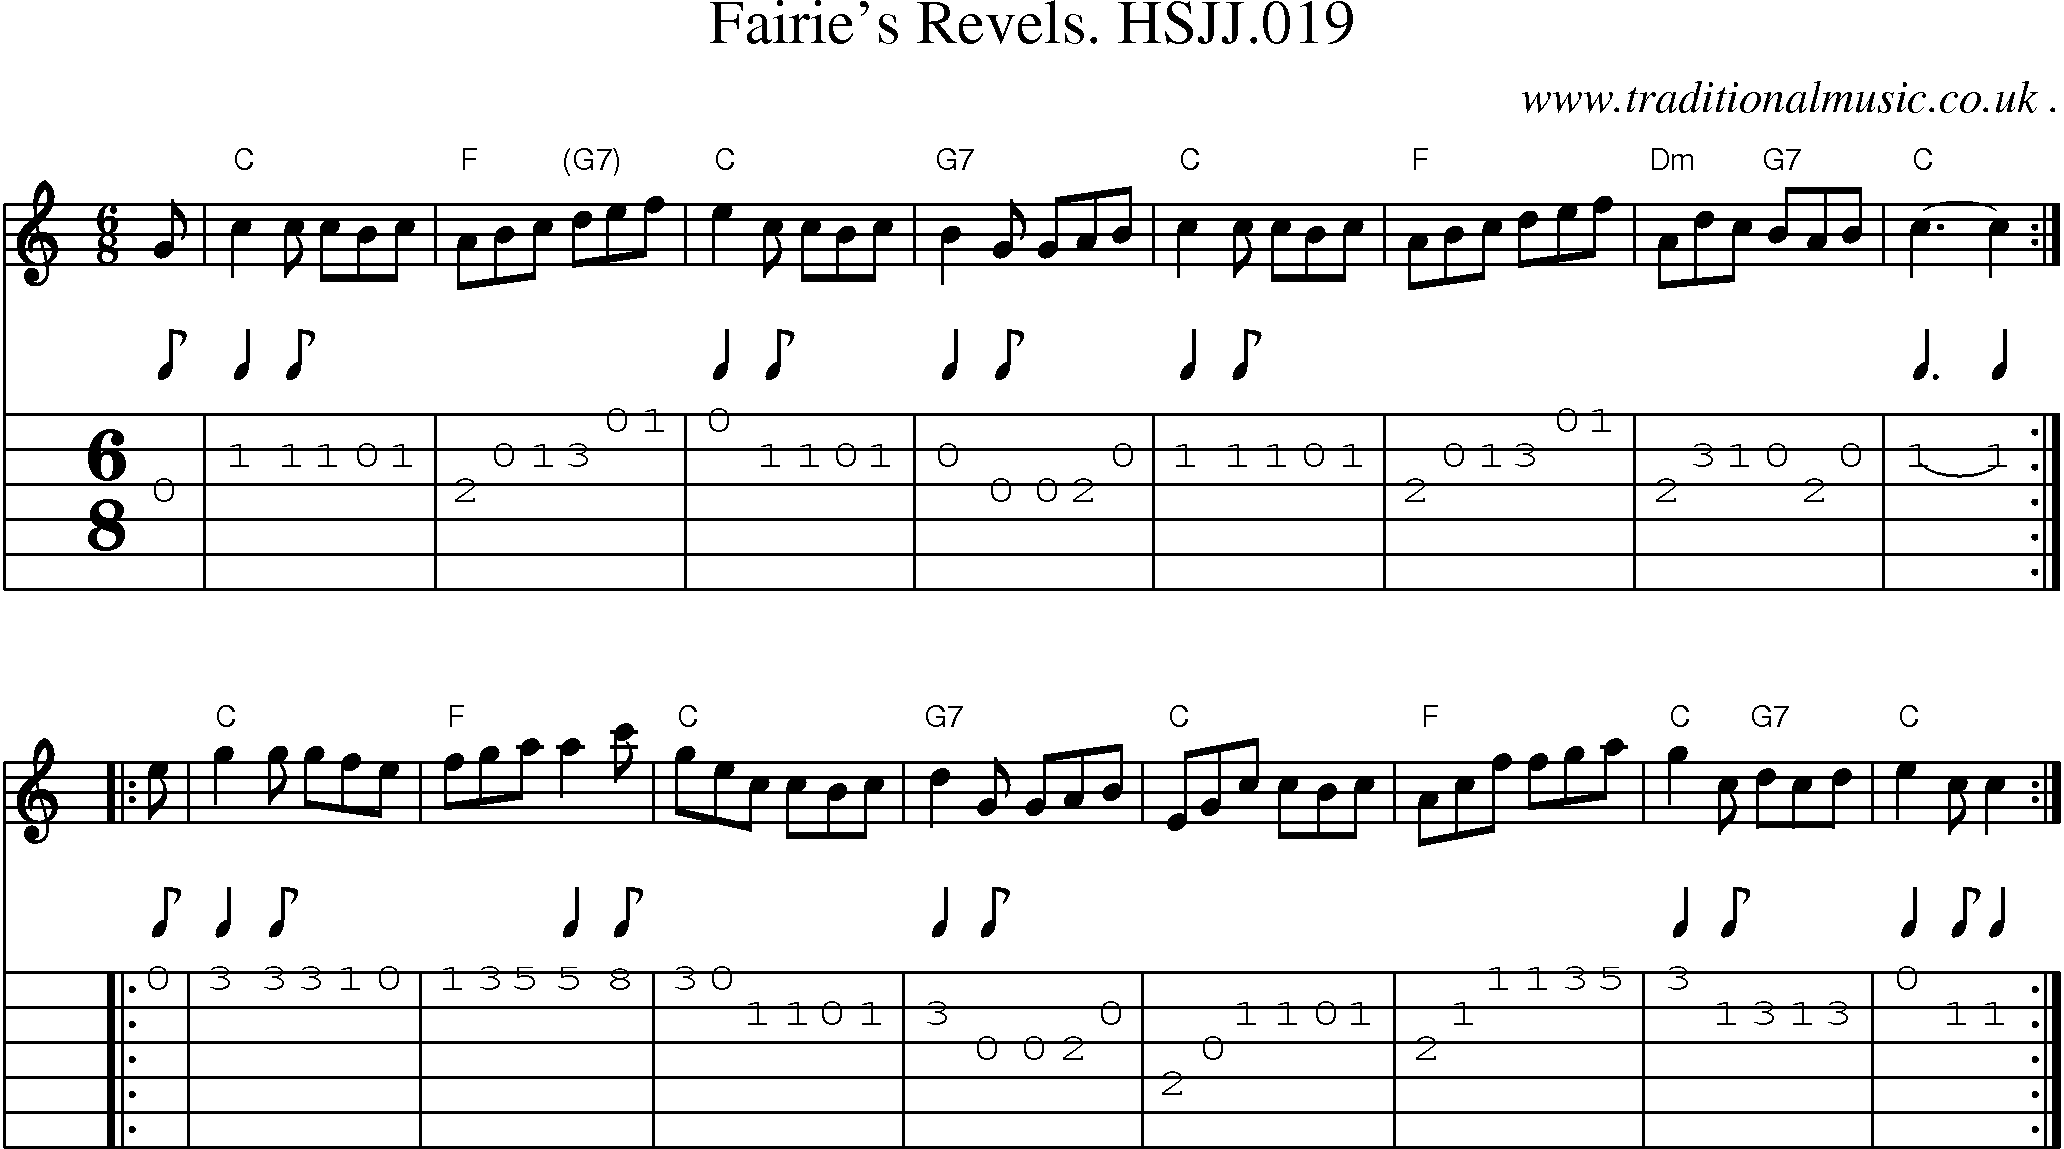 Sheet-music  score, Chords and Guitar Tabs for Fairies Revels Hsjj019